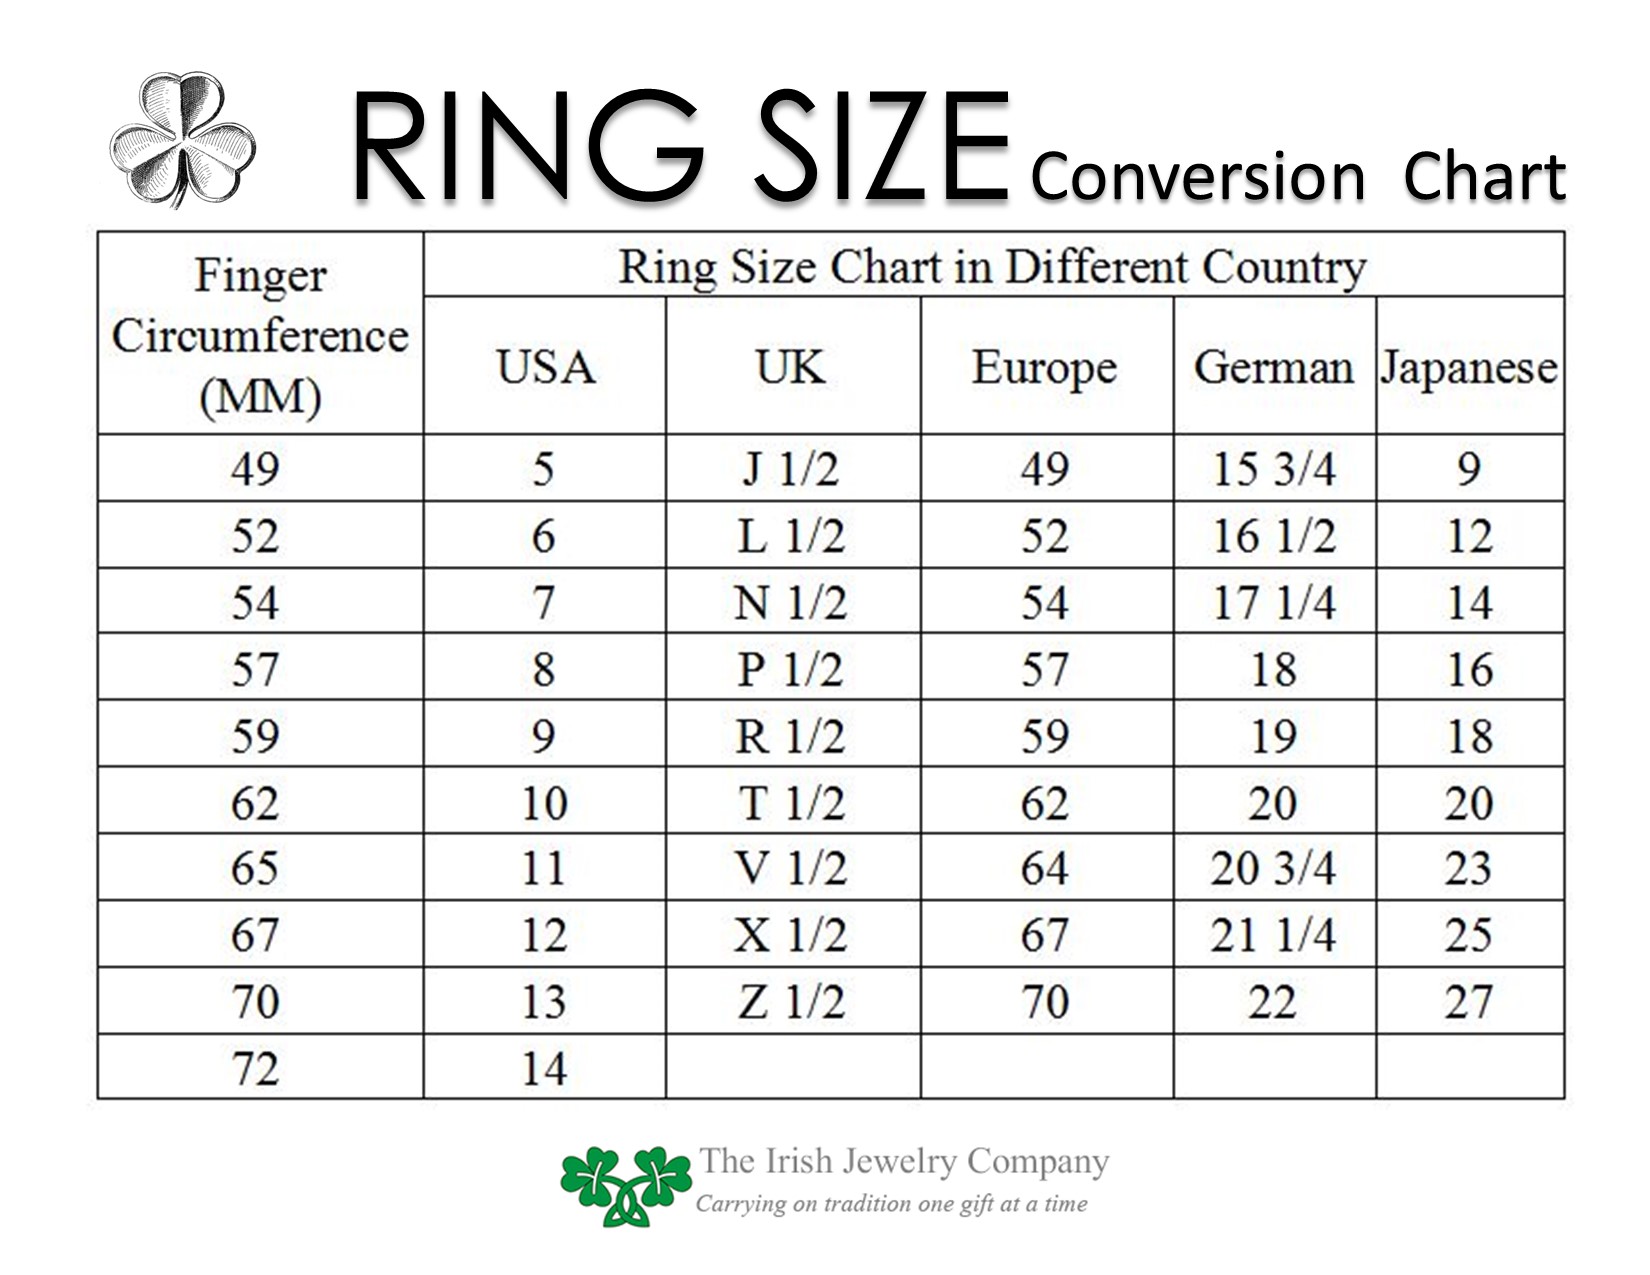 Ring size International Conversion Chart